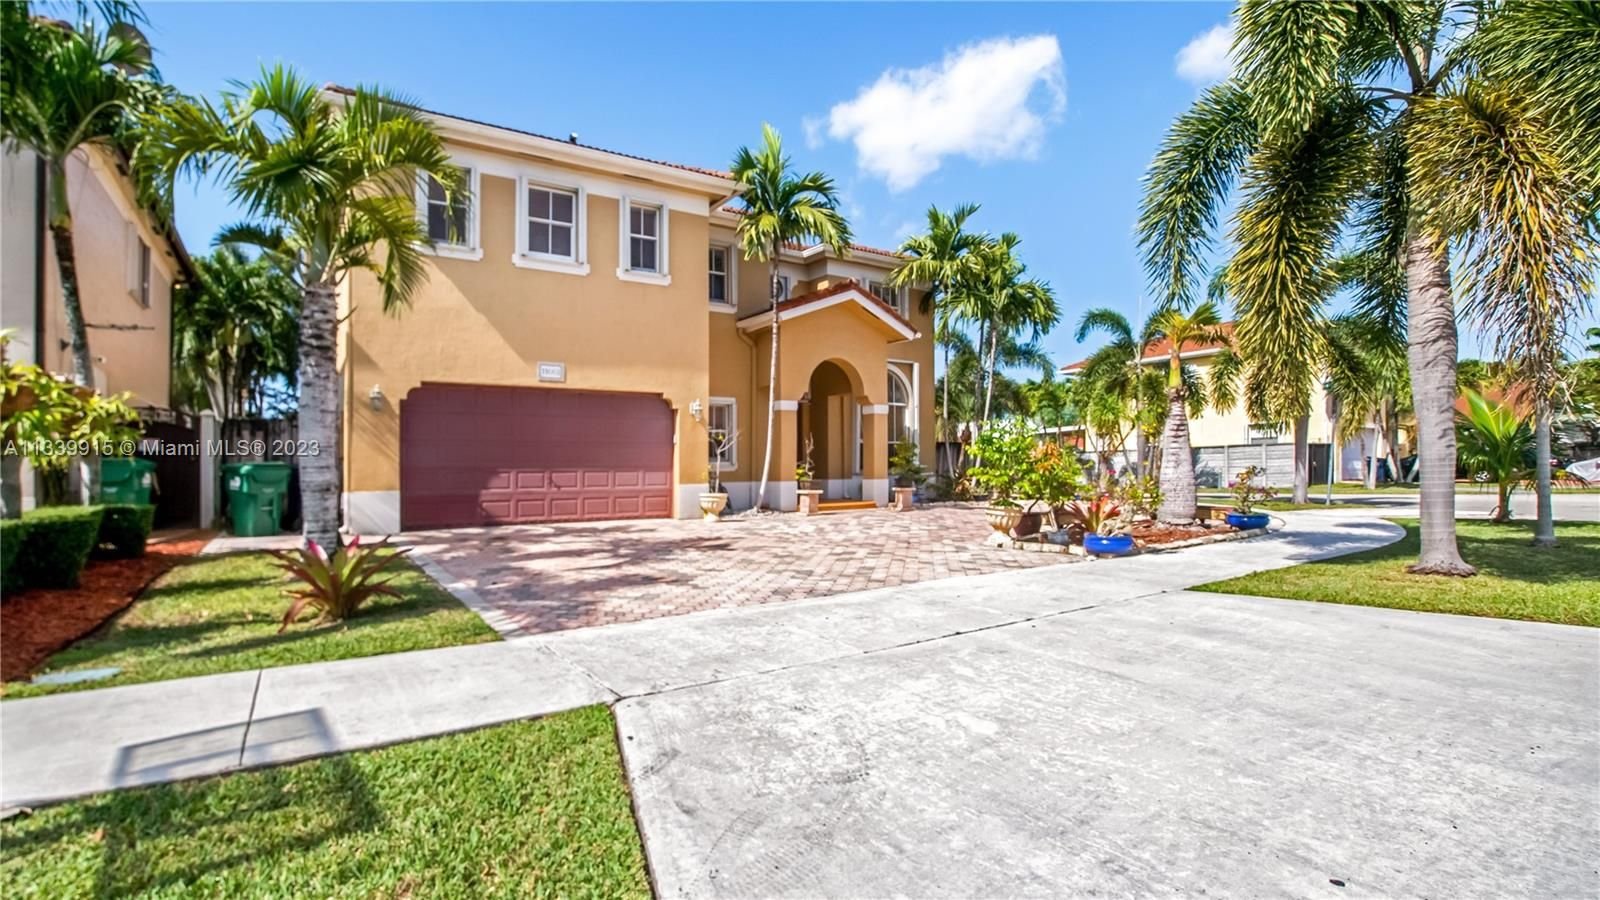 Real estate property located at 11668 153rd Ct, Miami-Dade County, Miami, FL